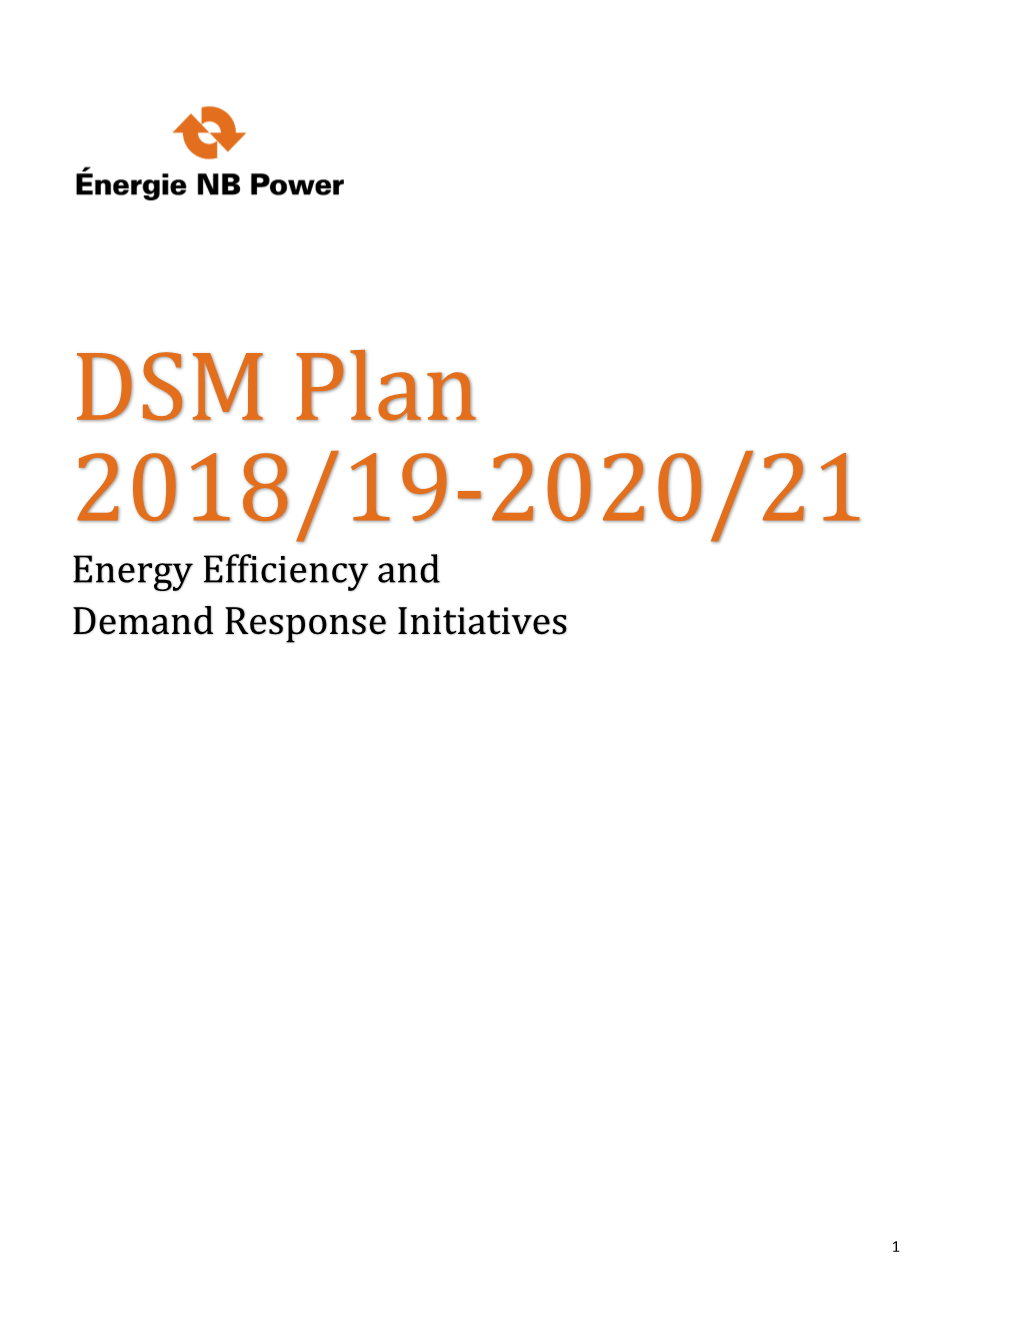 DSM Plan 2018/19-2020/21 Energy Efficiency and Demand Response Initiatives